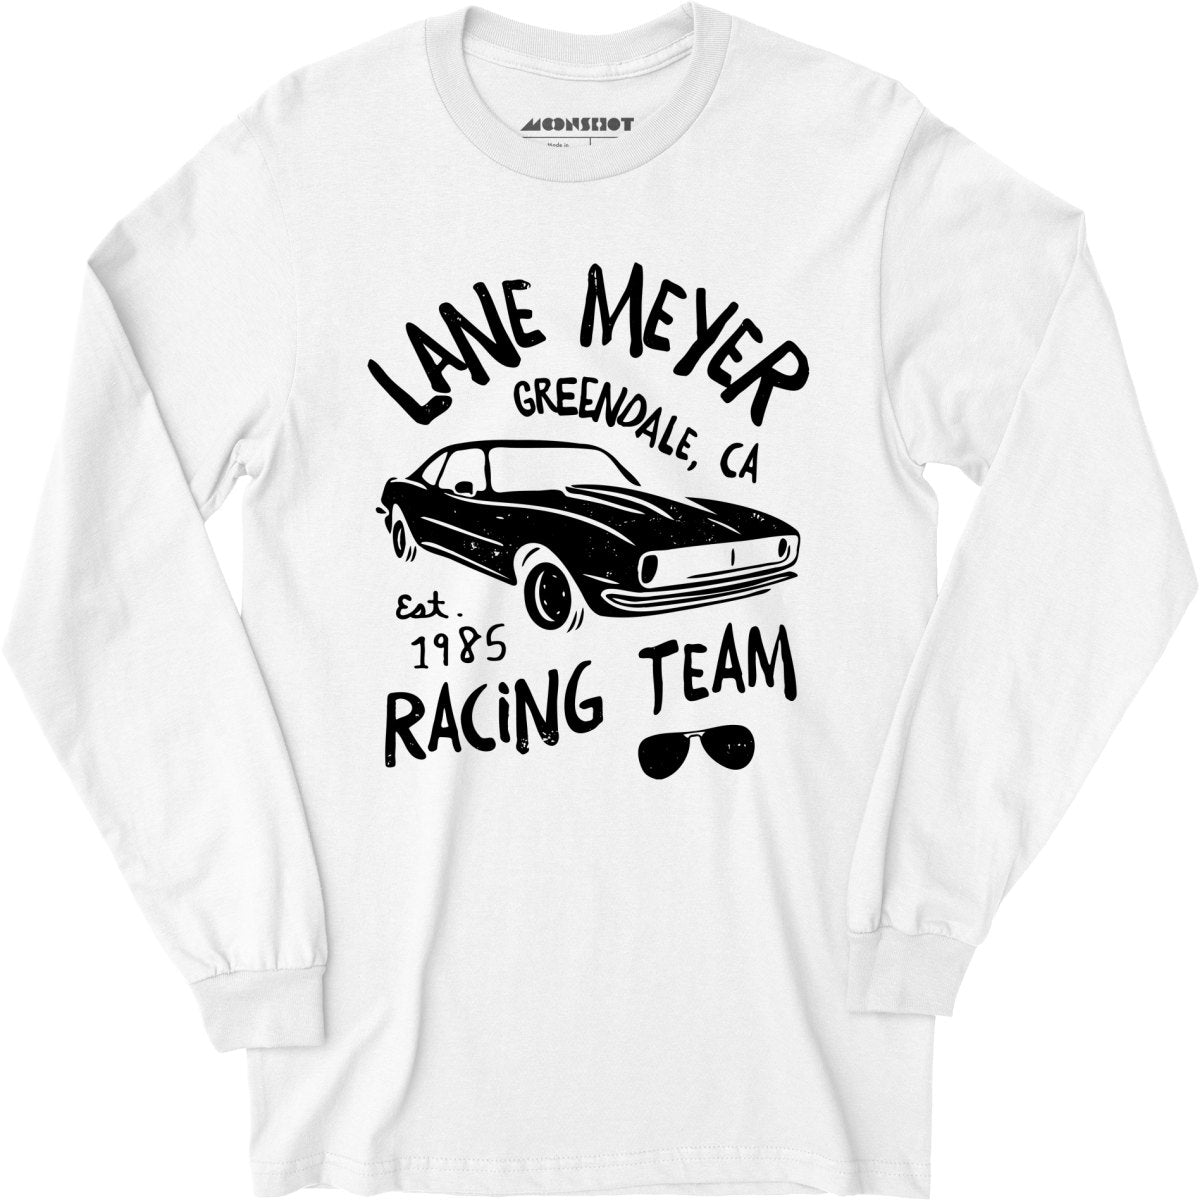 Lane Meyer Racing Team - Long Sleeve T-Shirt